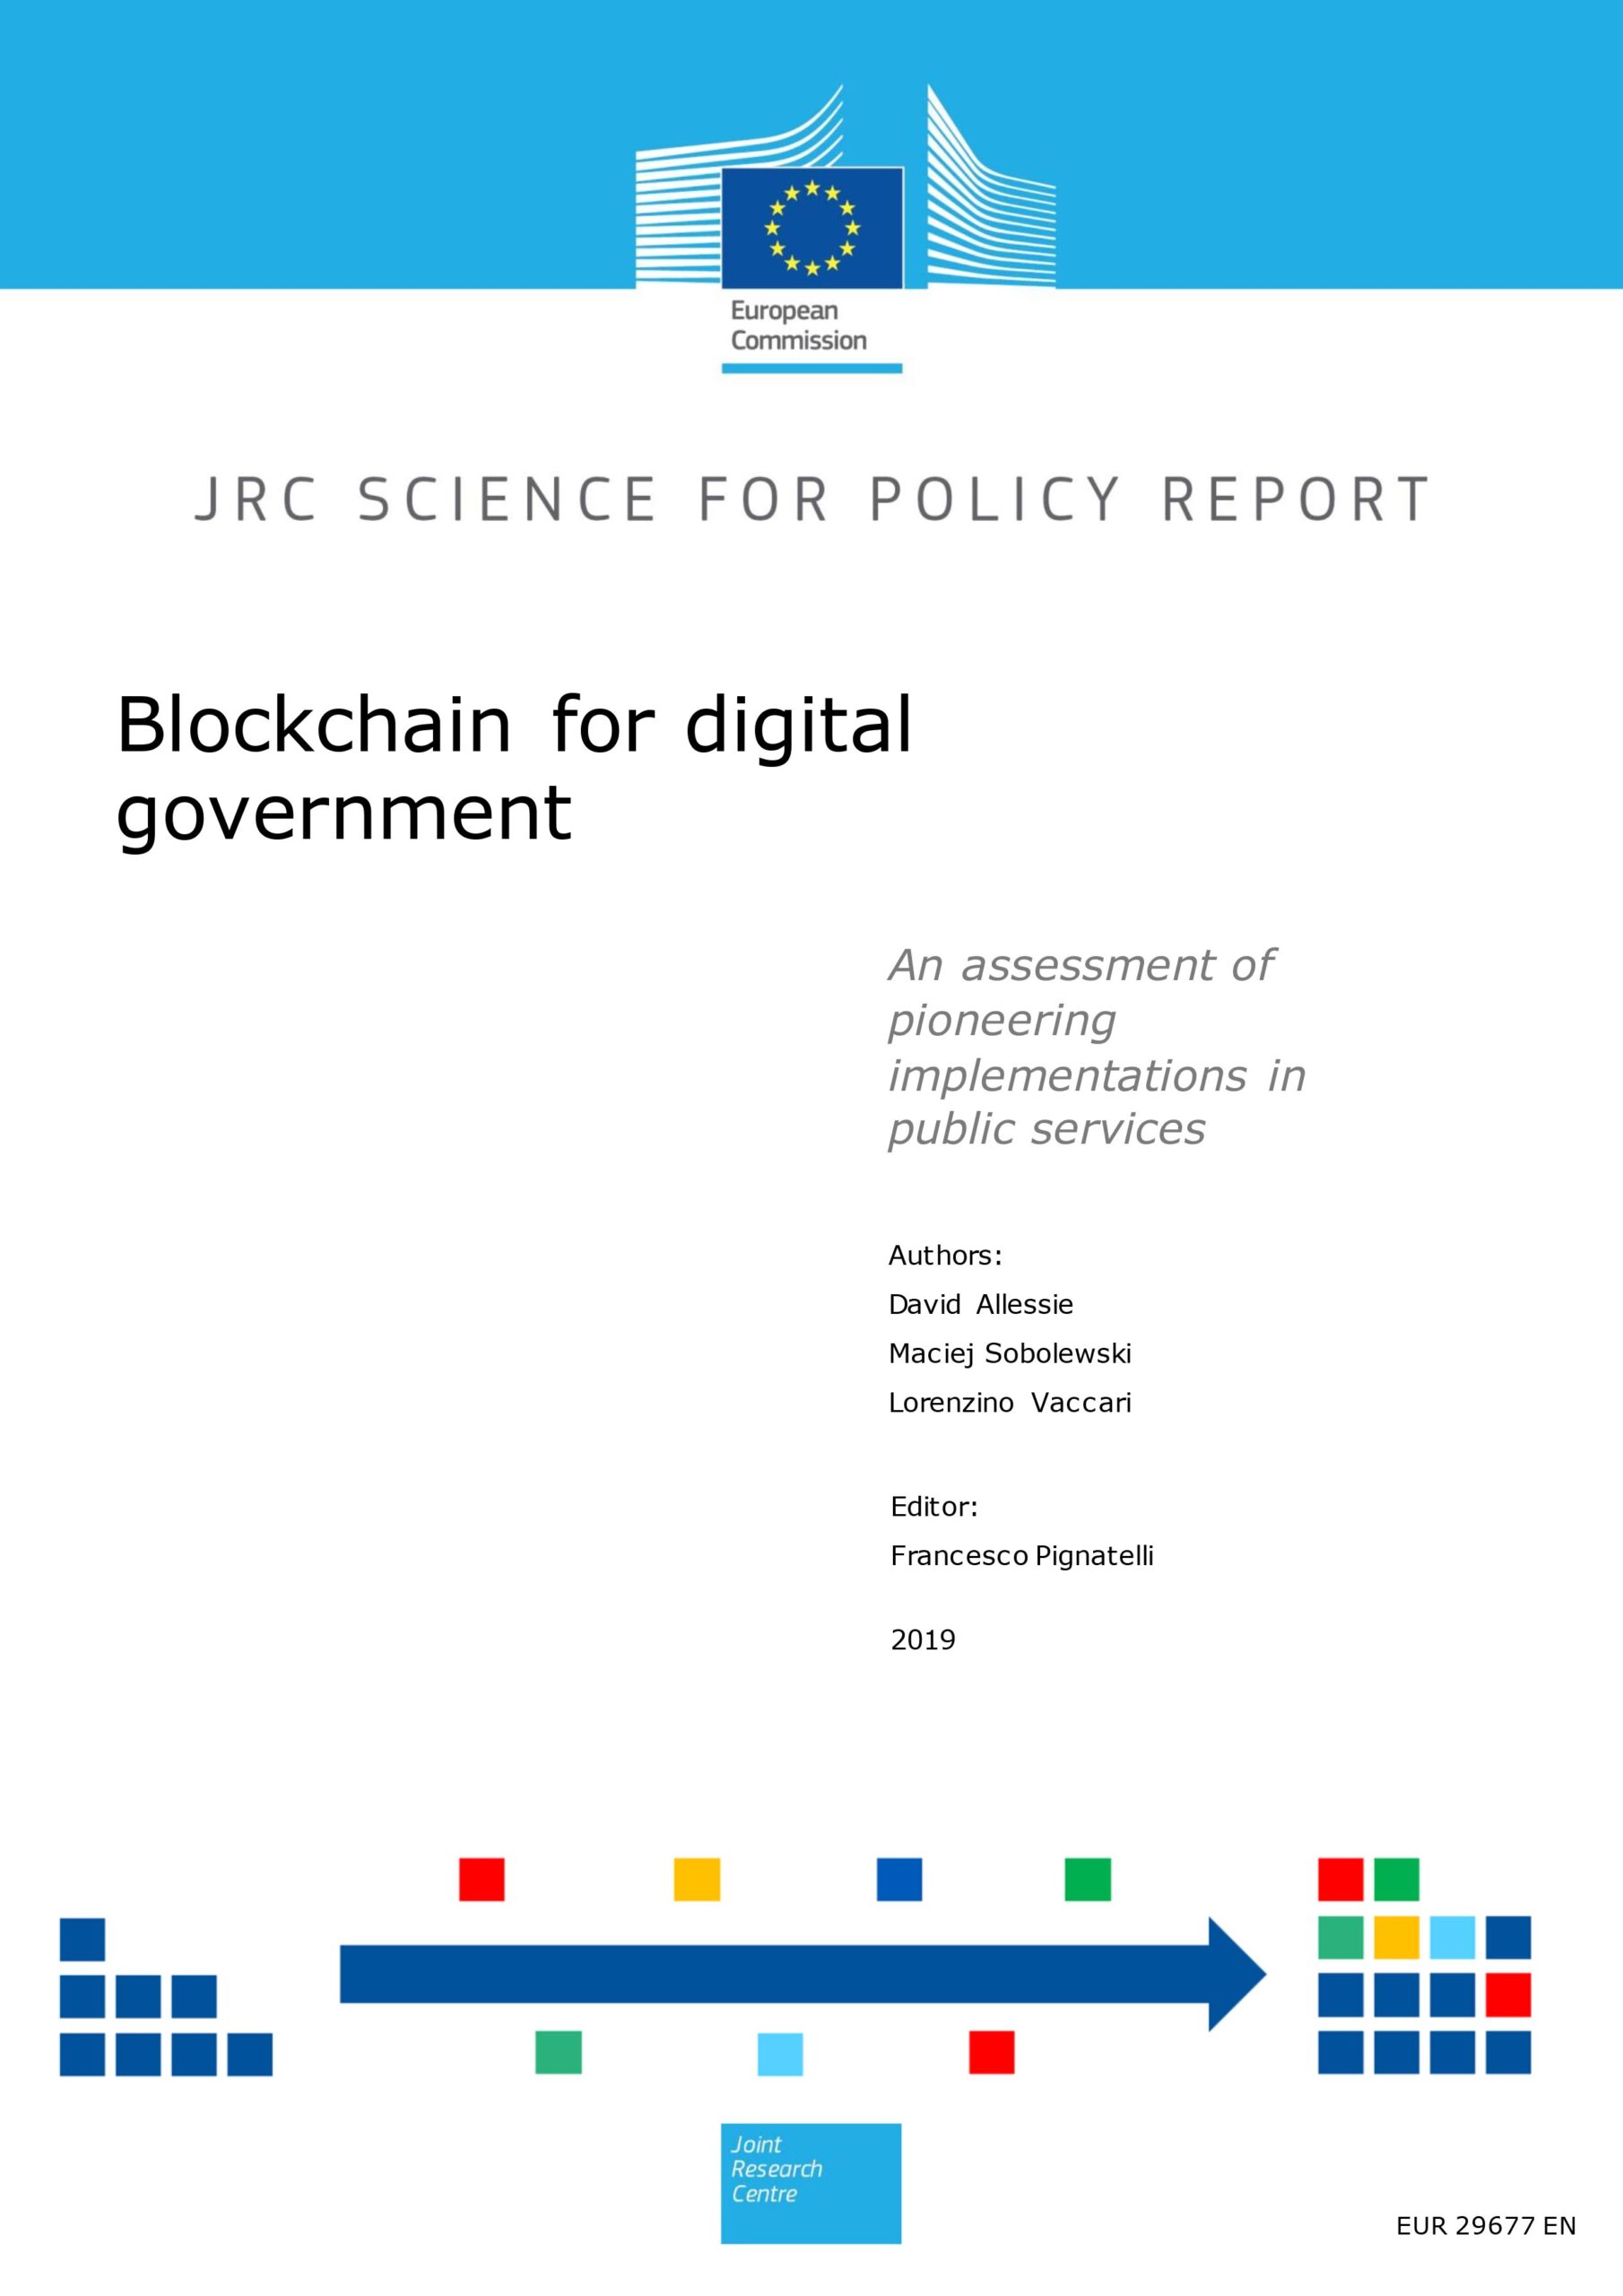 Blockchain for Digital Government